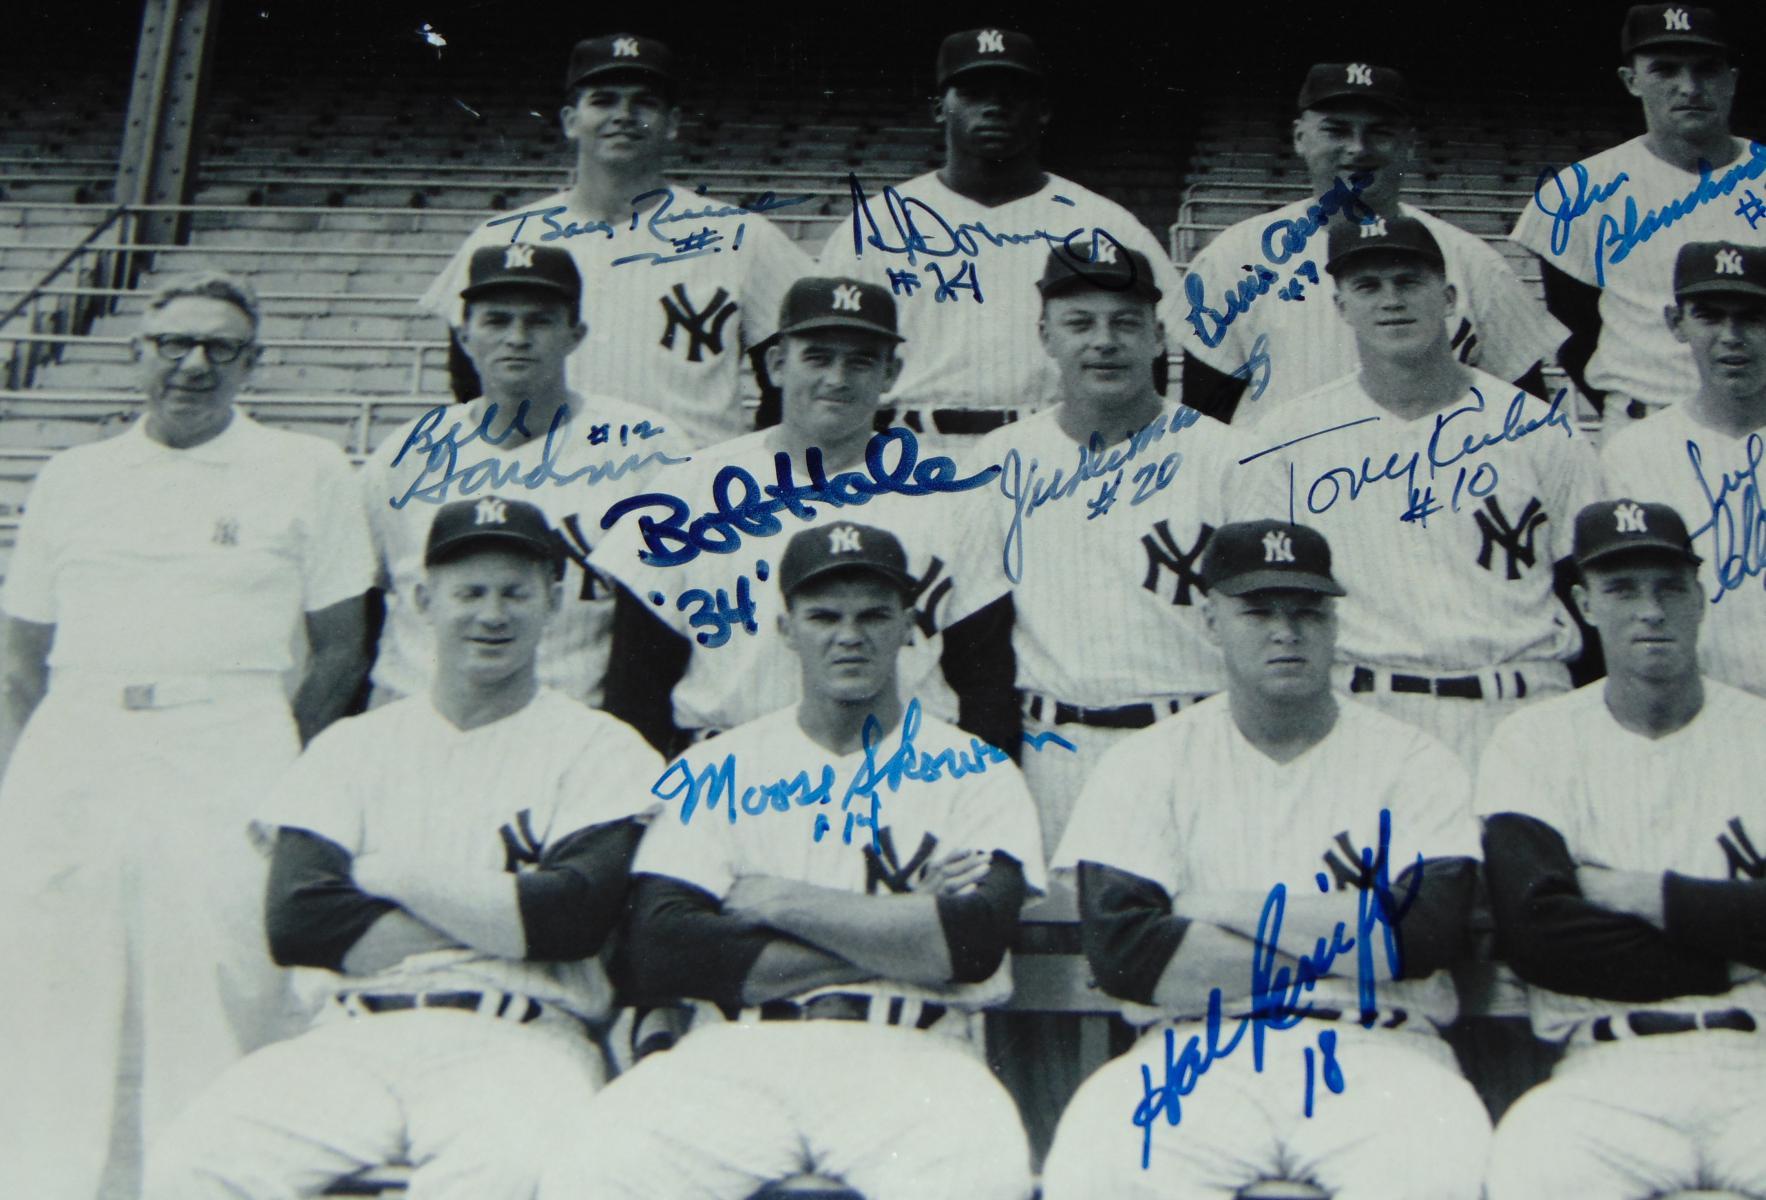 1961 World Series Champions Yankees Display.